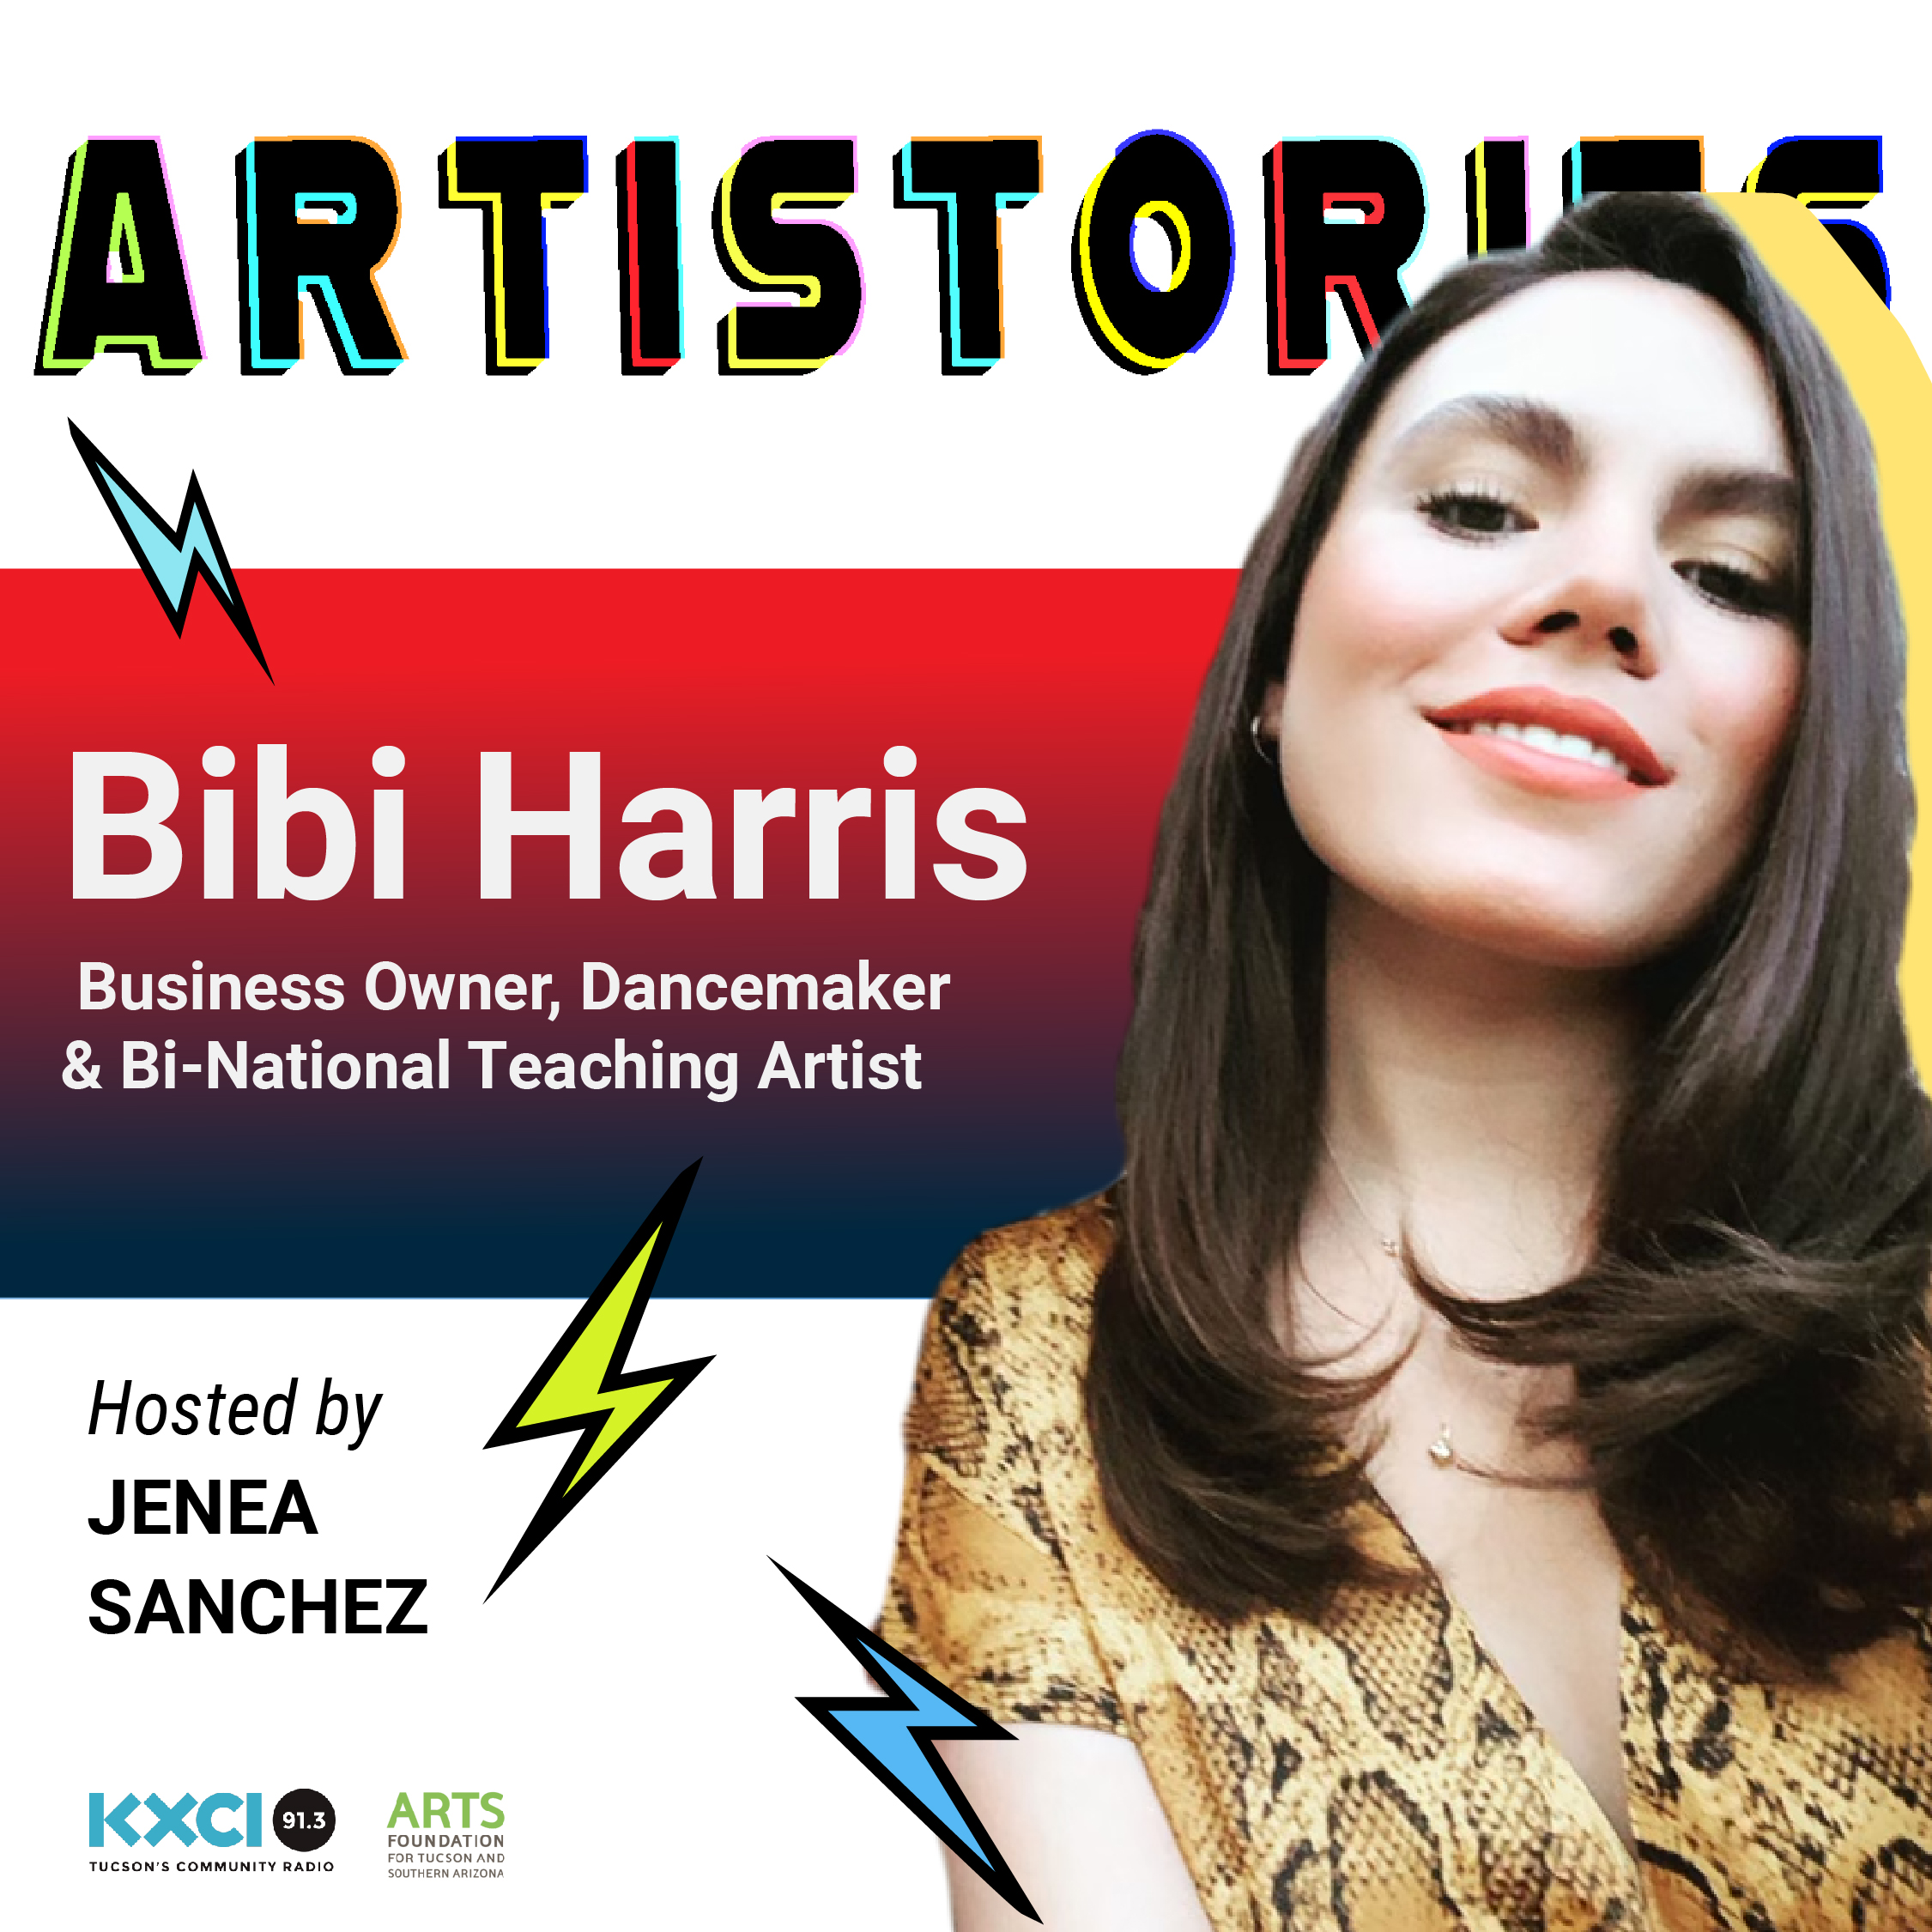 Bibi Harris - Business Owner, Dancemaker and Bi-National Teaching Artist